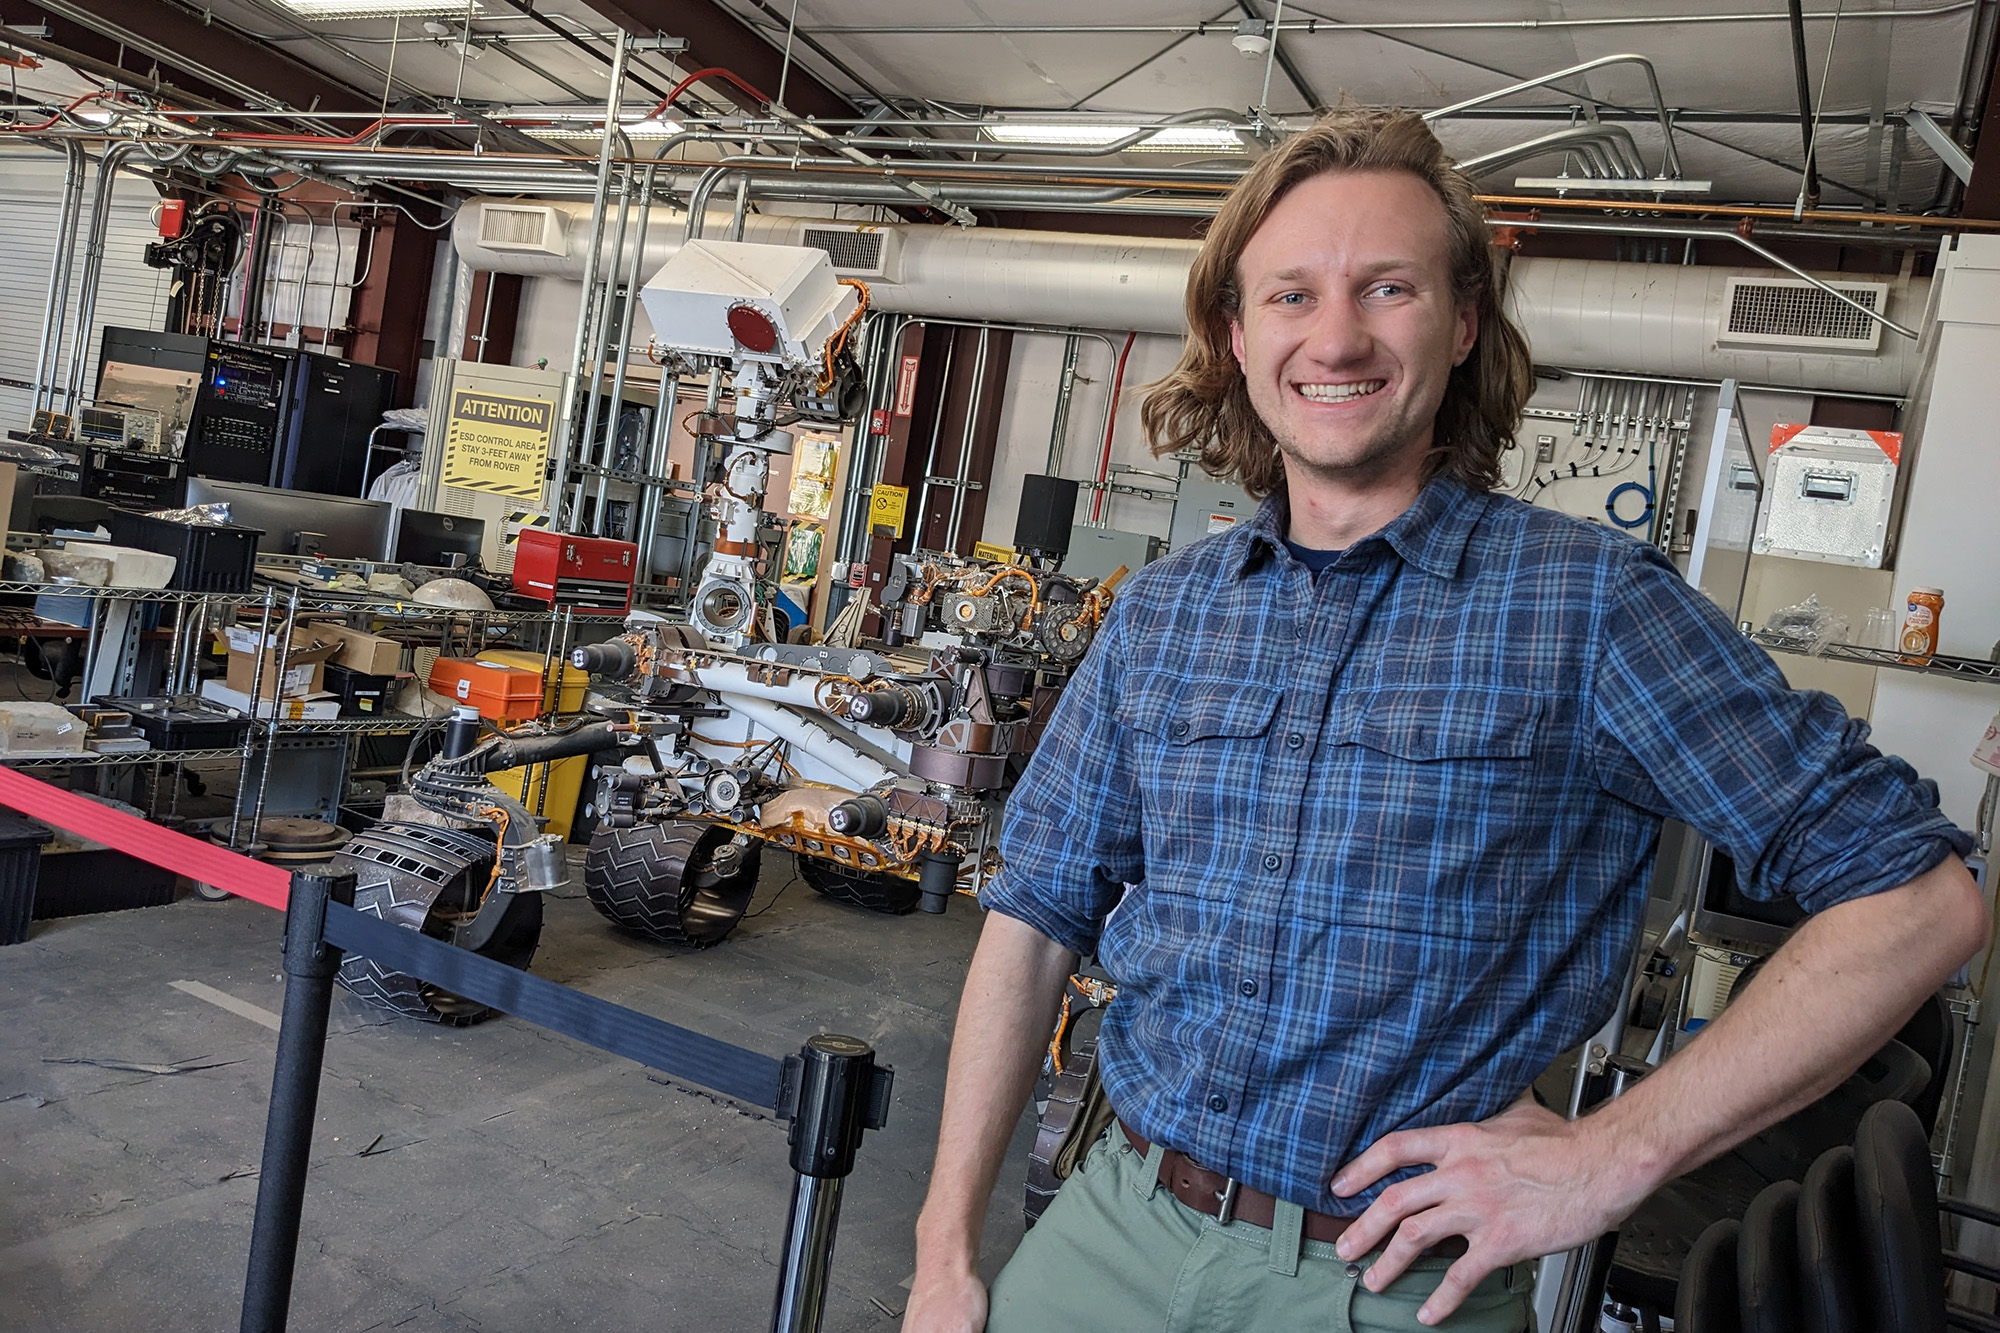 Iowa grad student Jacob Payne at NASA’s Astrophysics Mission Design School 